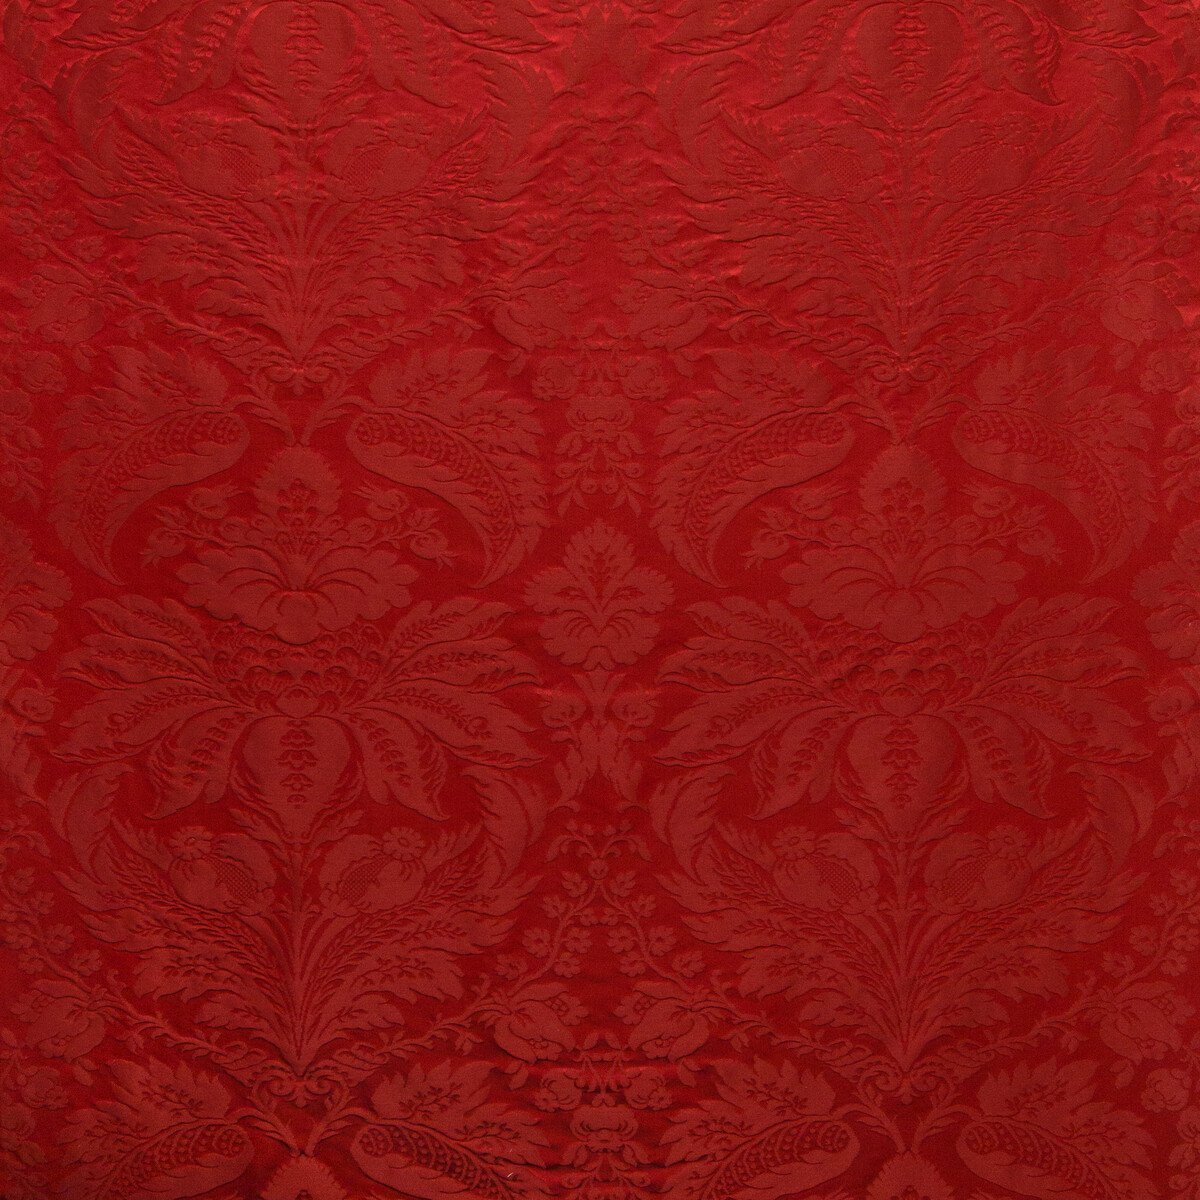 Brunschwig & Fils Damask Pierre Red Fabric | OnlineFabricStore